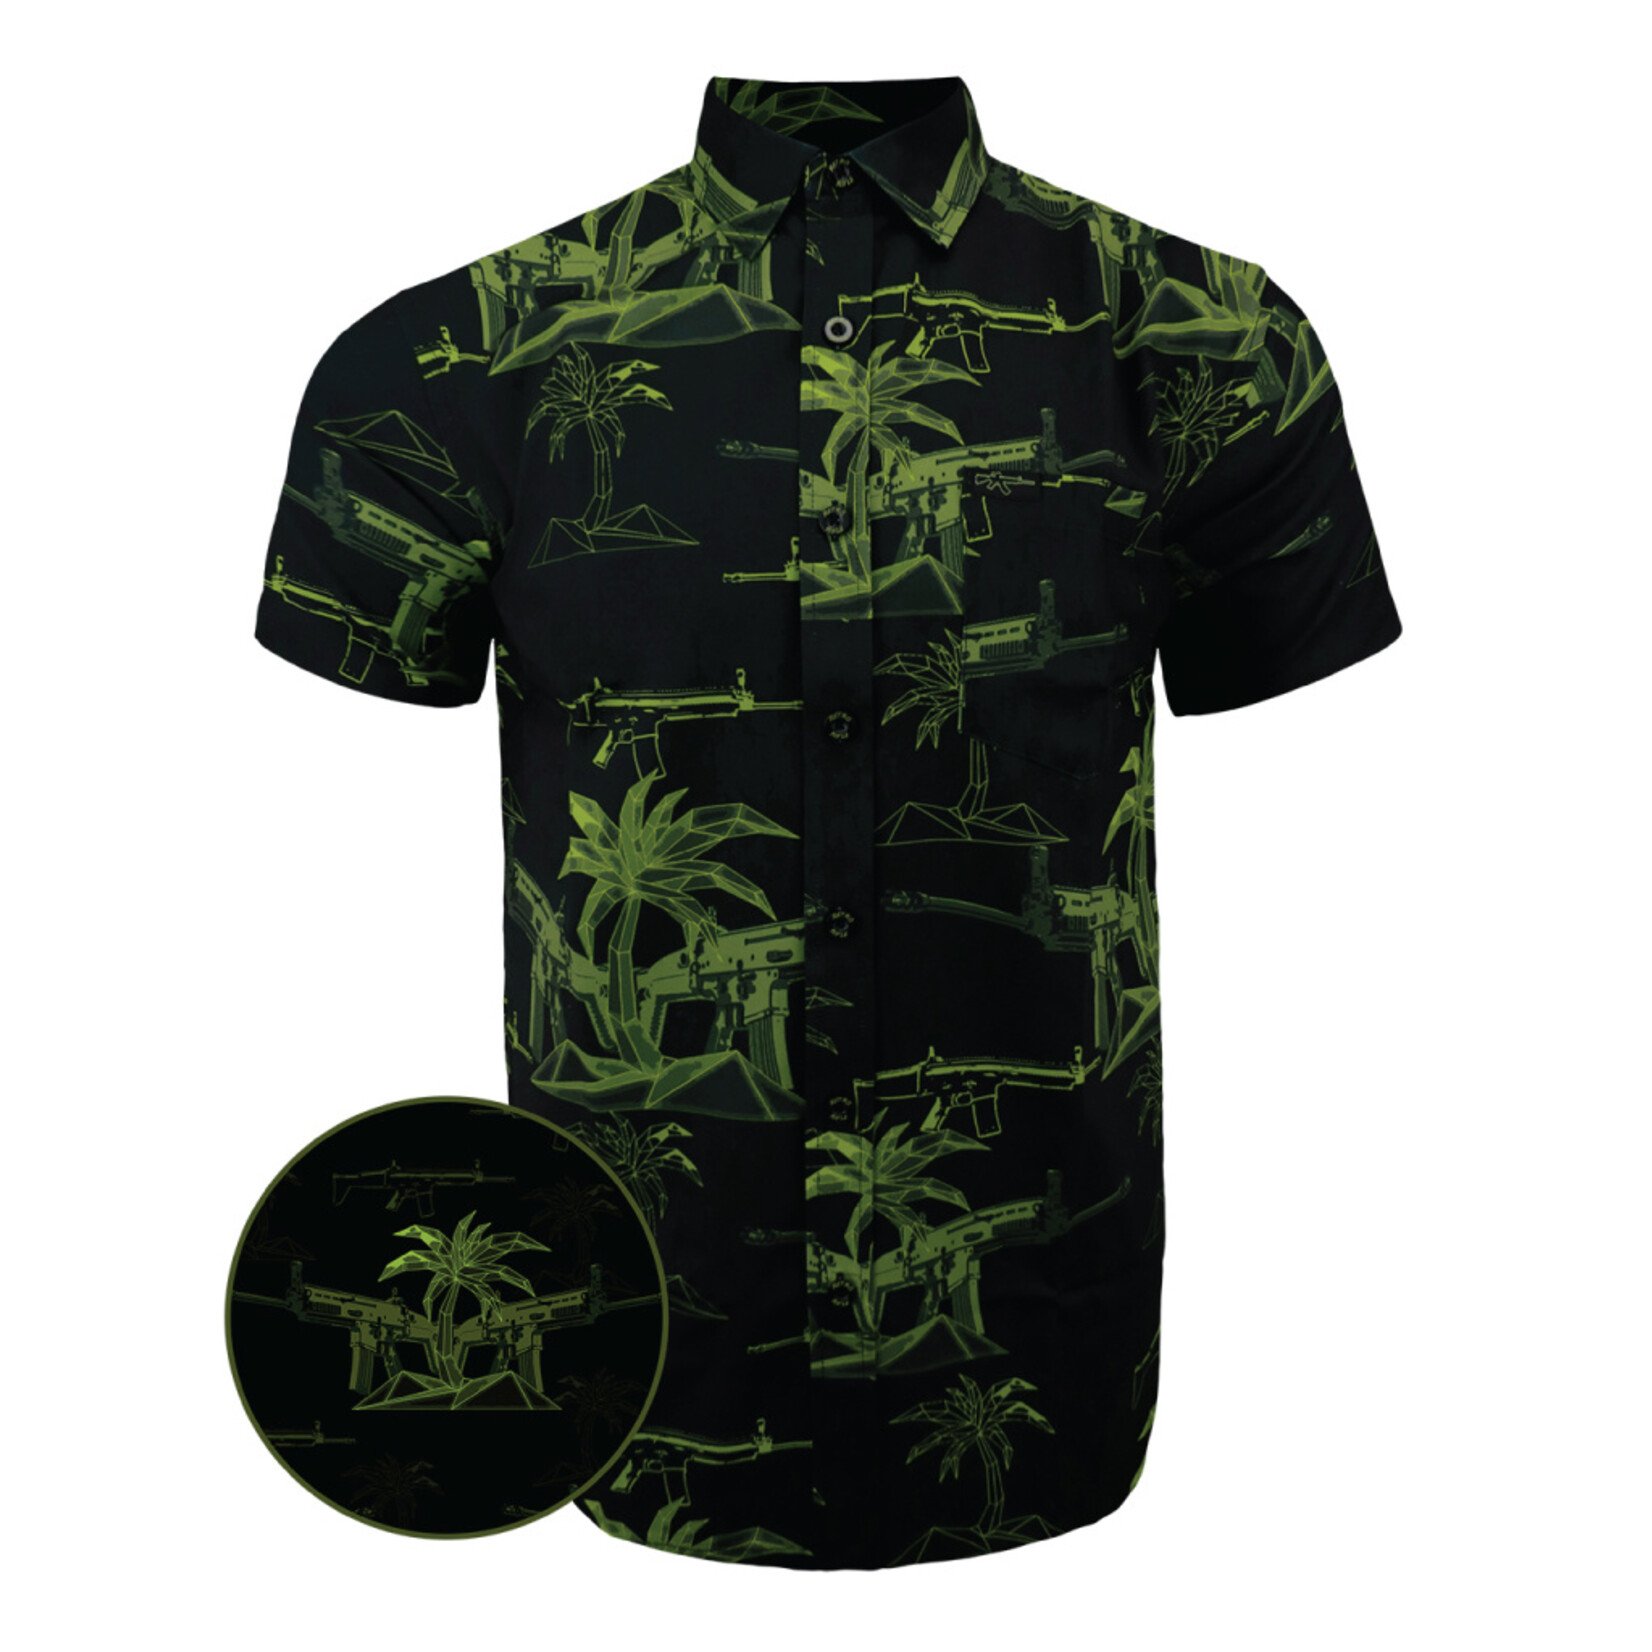 The Palm Hawaiian Shirt